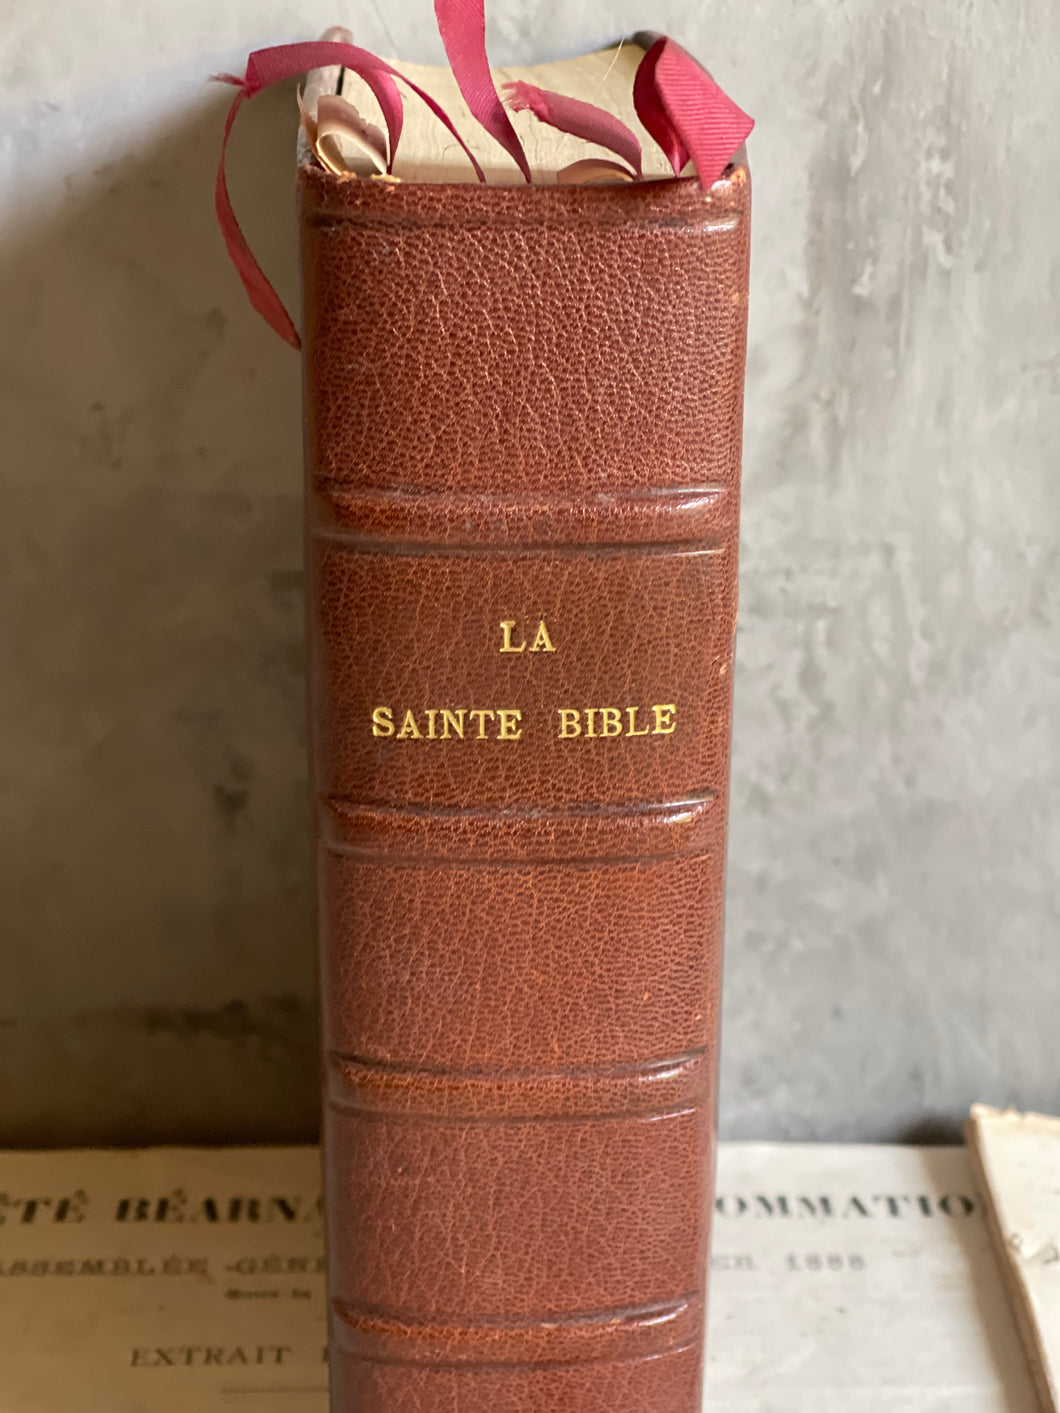 Antique French Leather Bound Bible - La Sainte Bible.